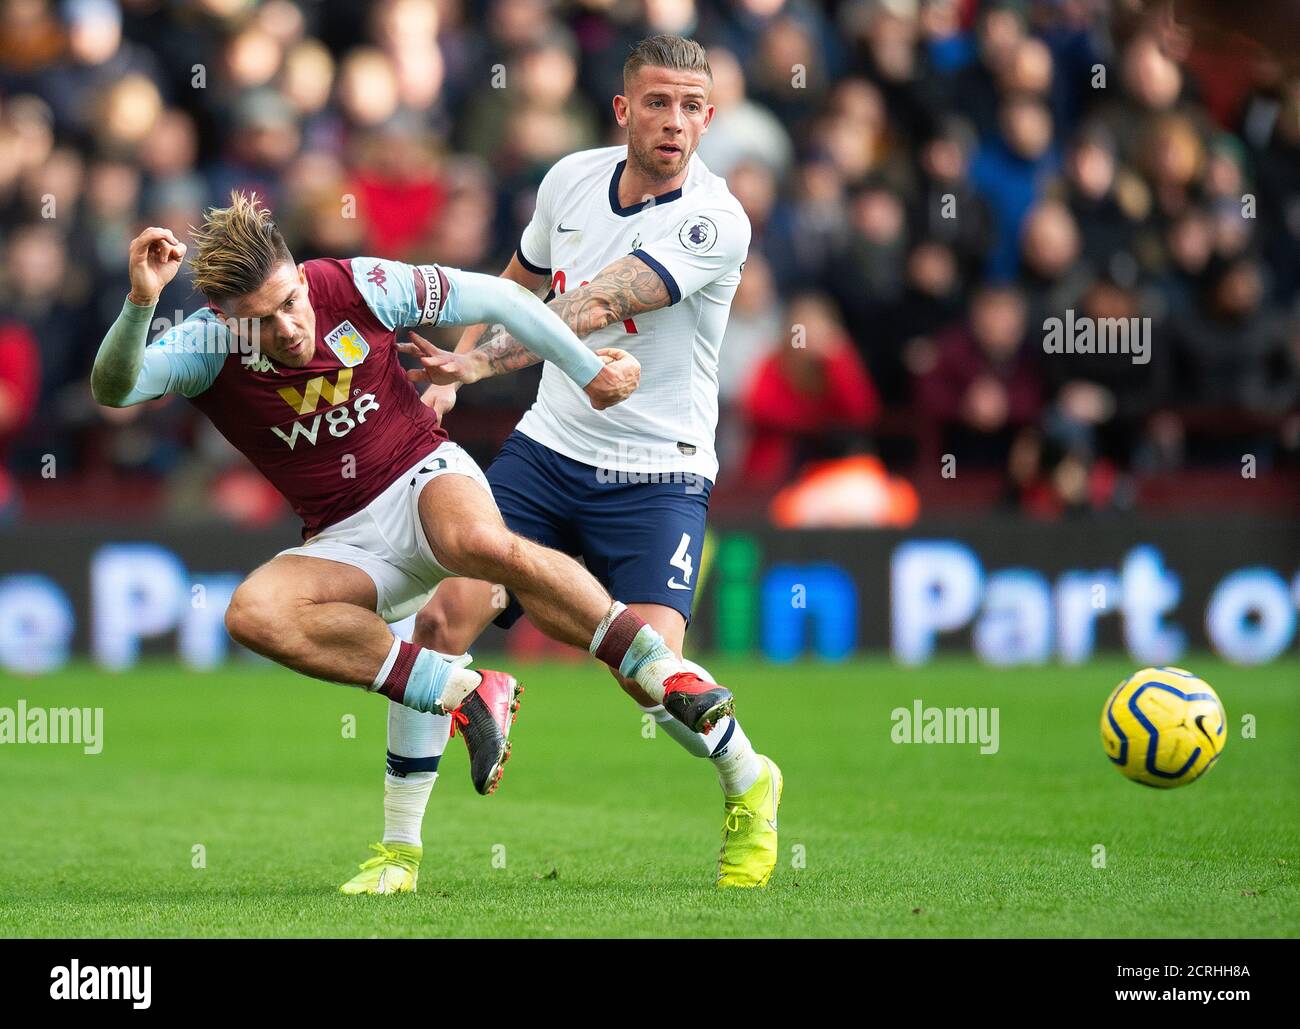 Aston Villa's Jack Grealish tackled by Toby Alderweireld   PHOTO CREDIT : © MARK PAIN / ALAMY STOCK PHOTO Stock Photo